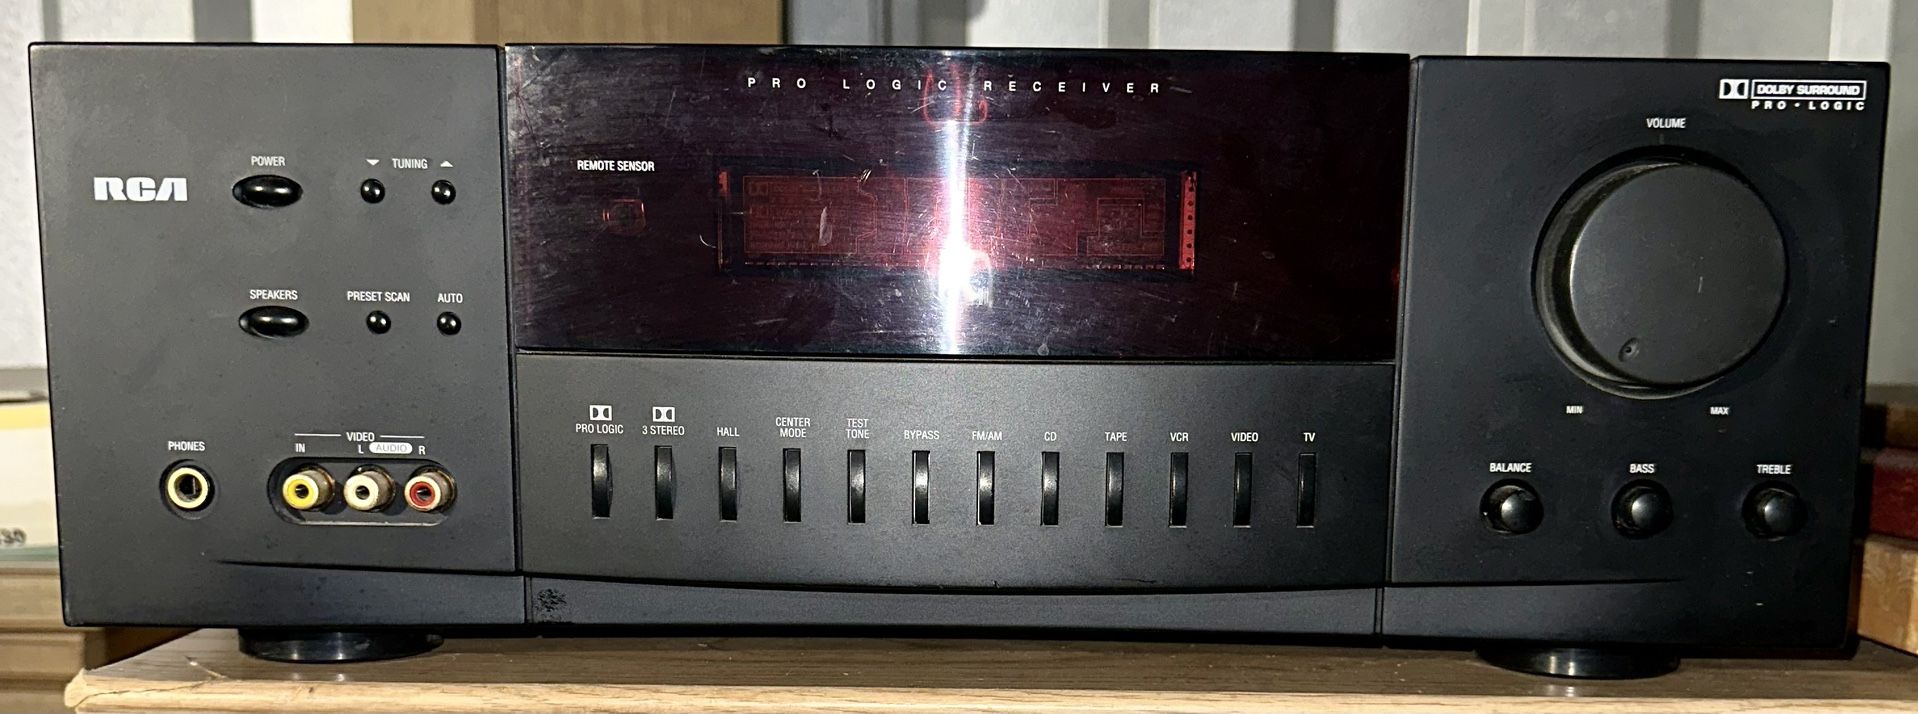 RCA RV-9968A Surround Sound Pro Logic Receiver